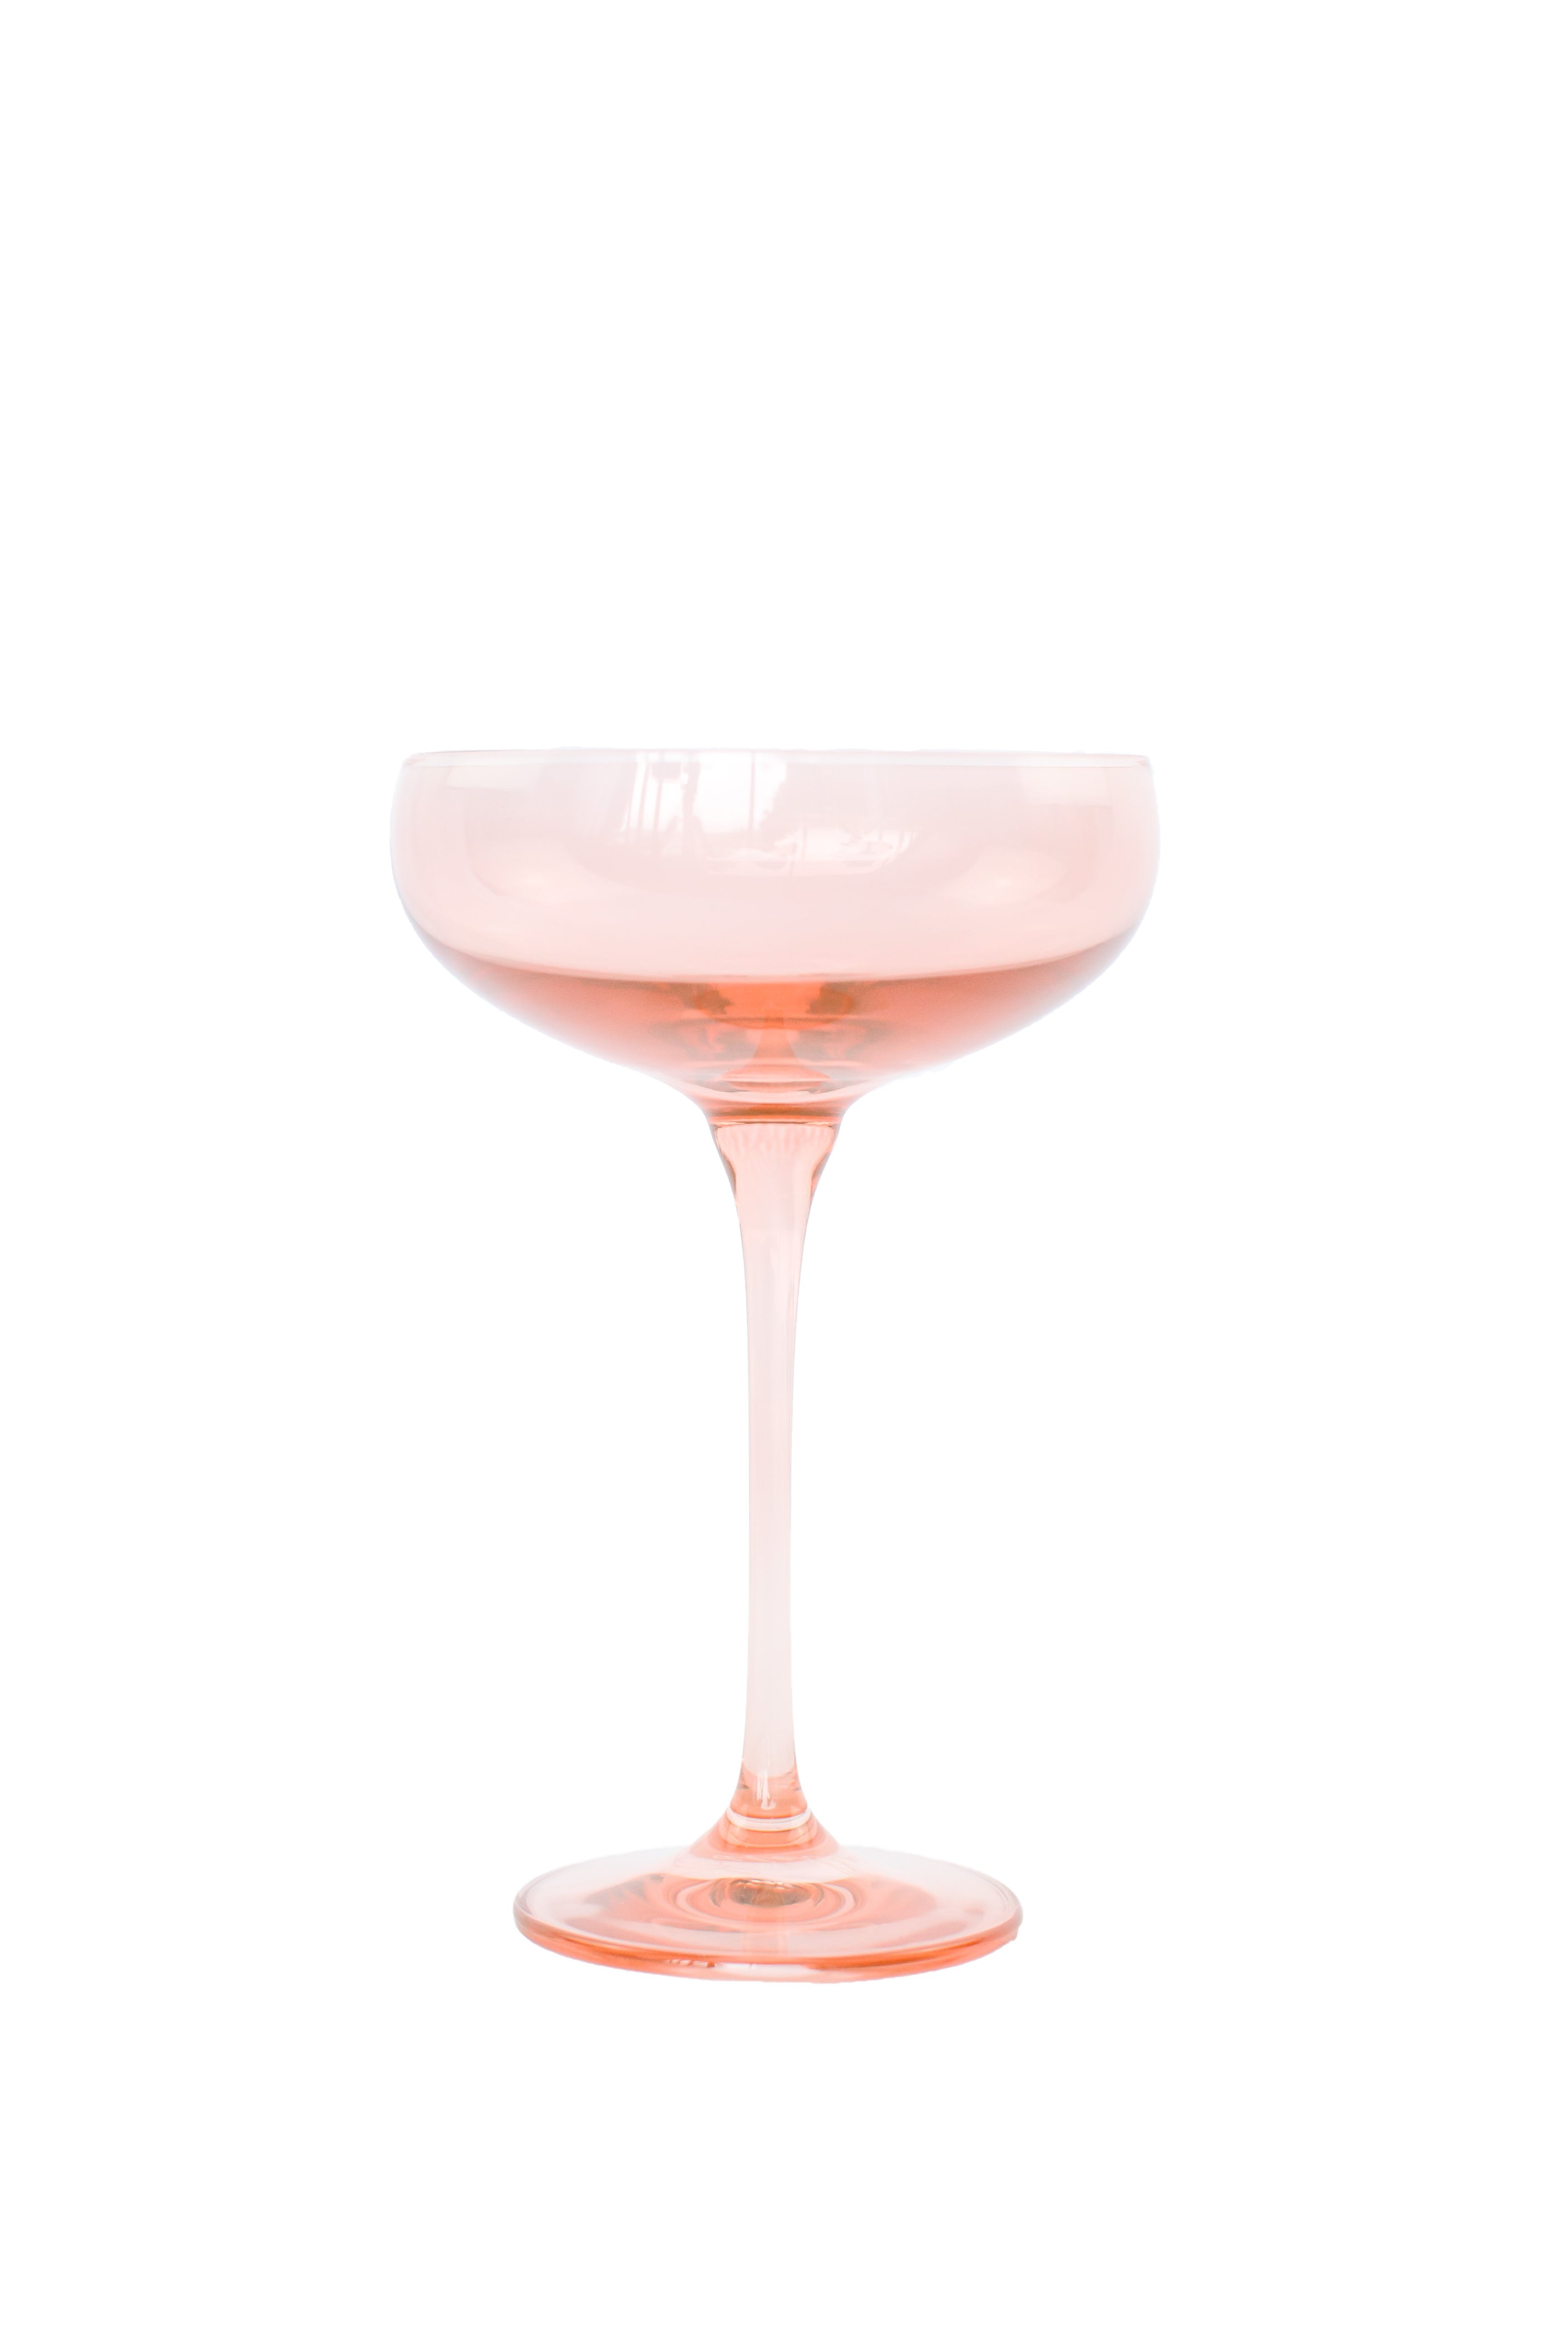 Estelle Colored Champagne Coupe Stemware - Set of 6 {Blush Pink}